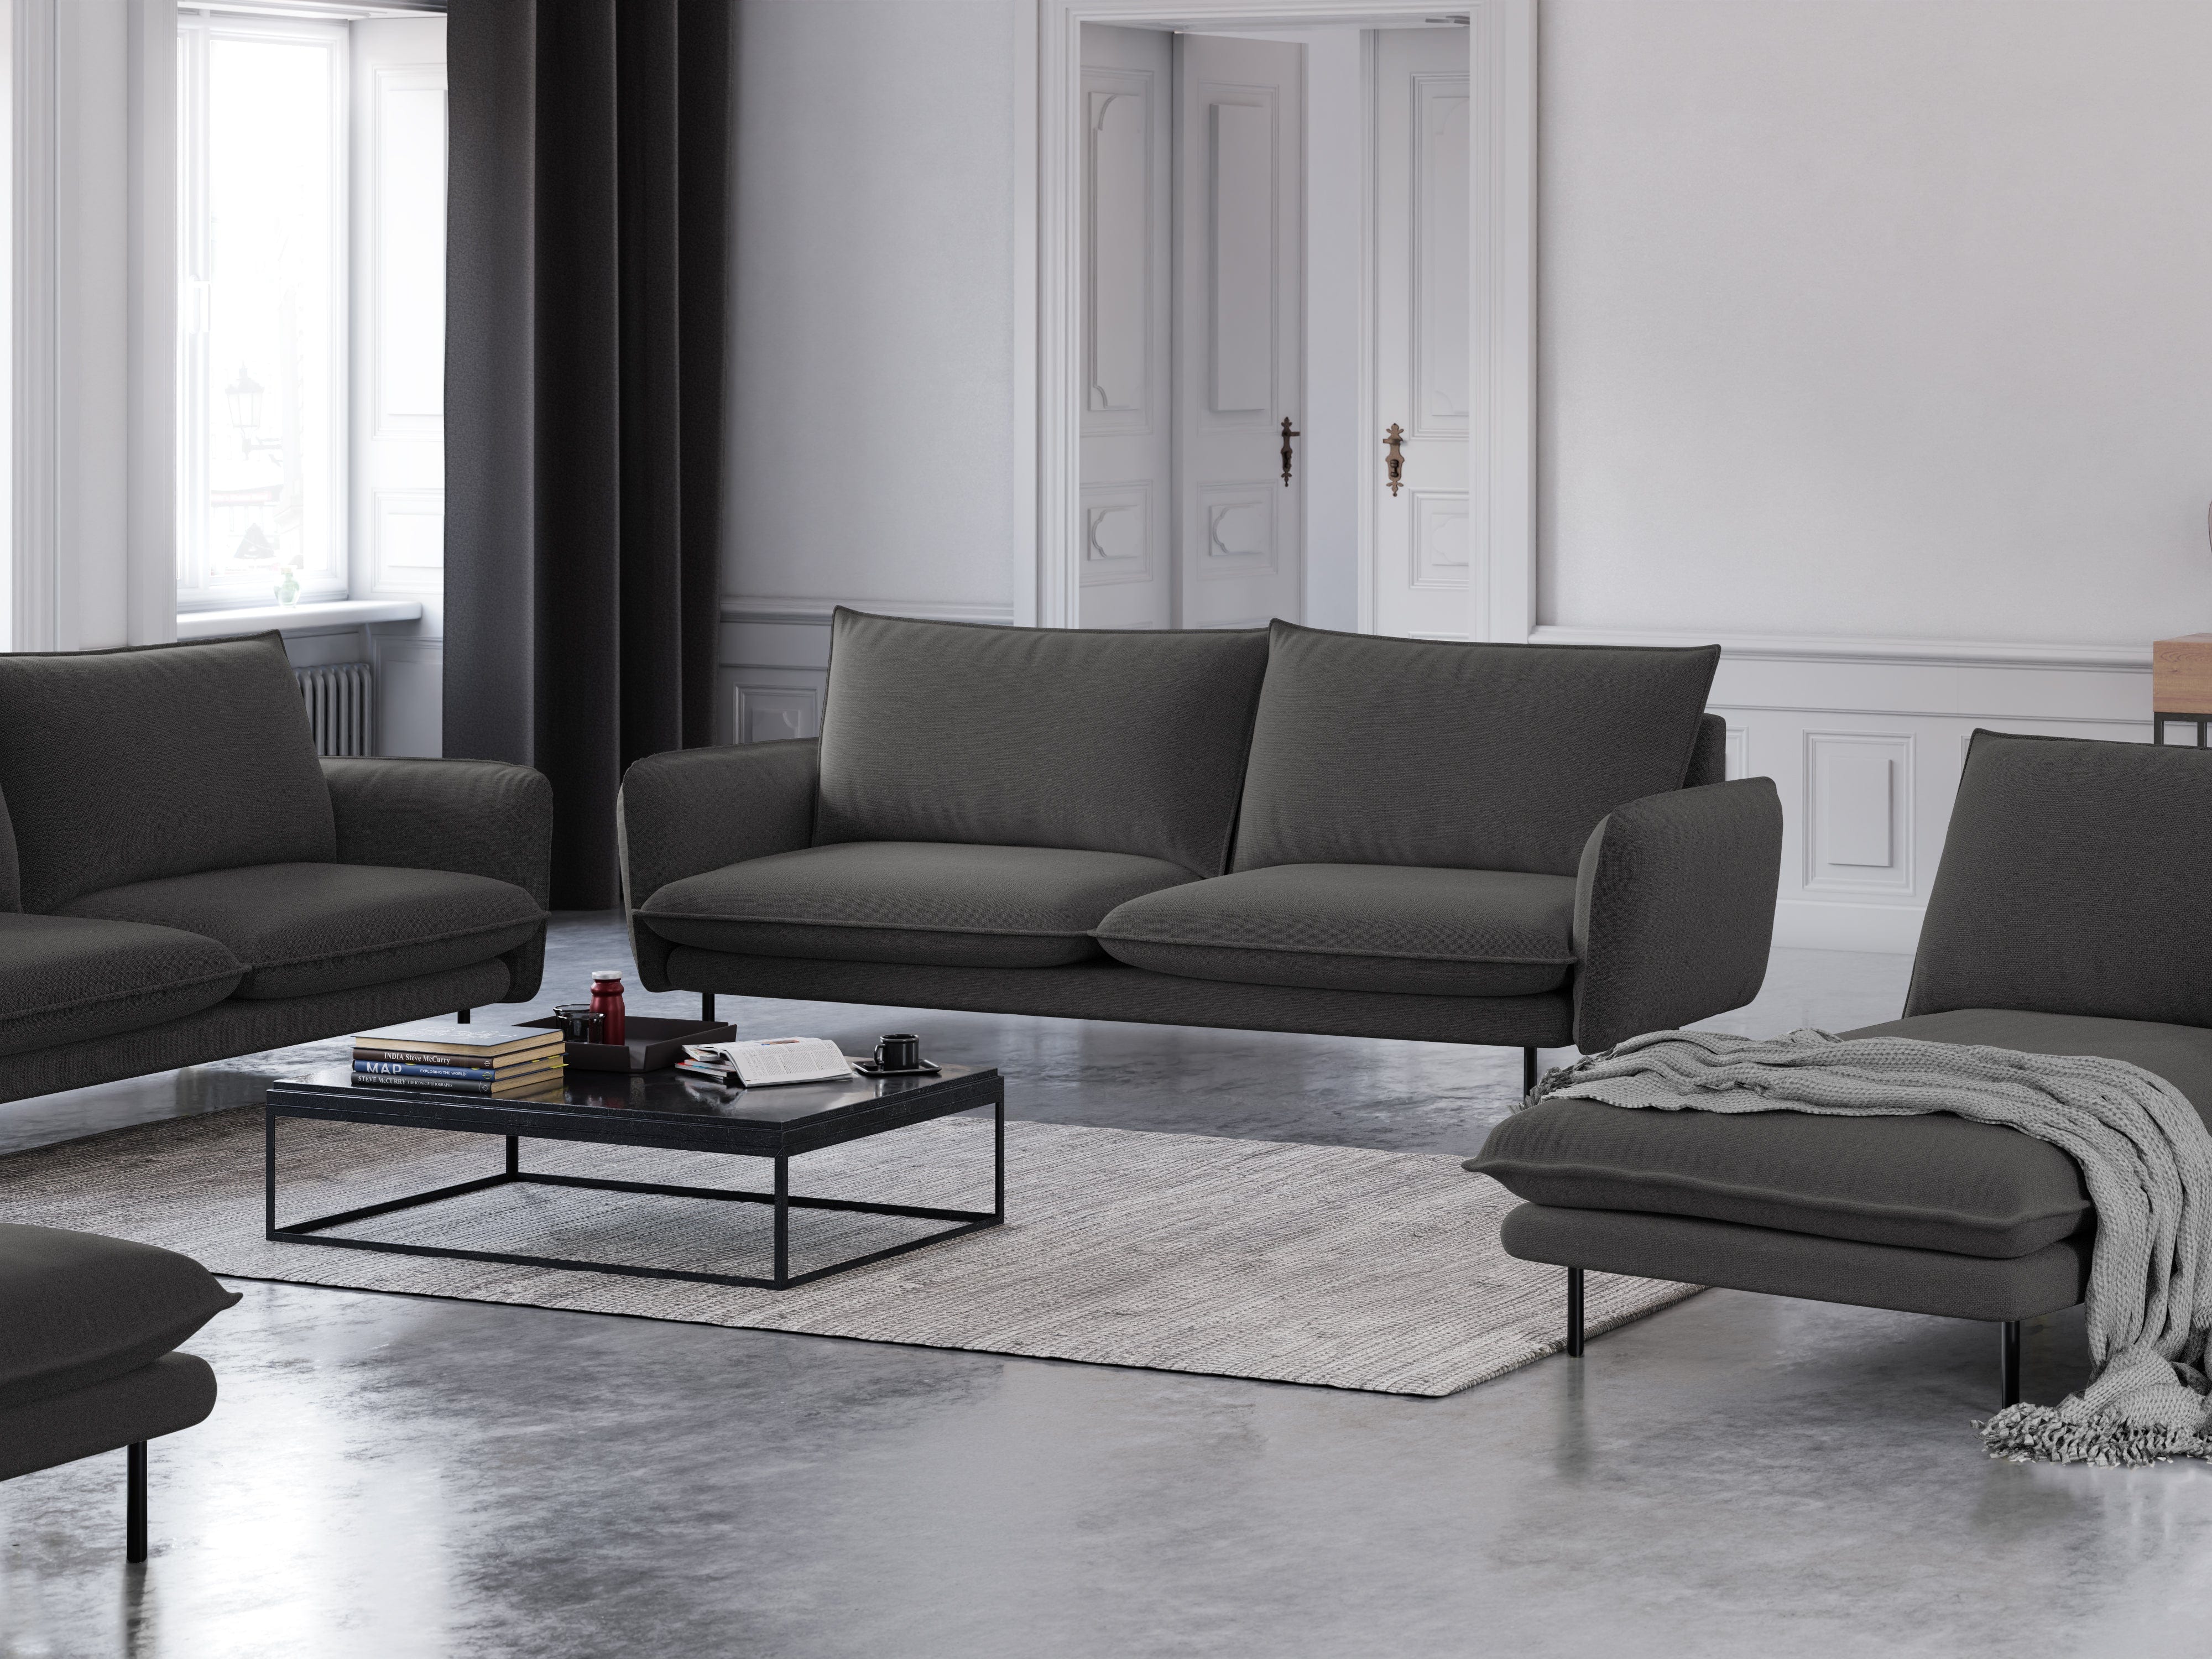 4-seater sofa VIENNA dark grey with black base